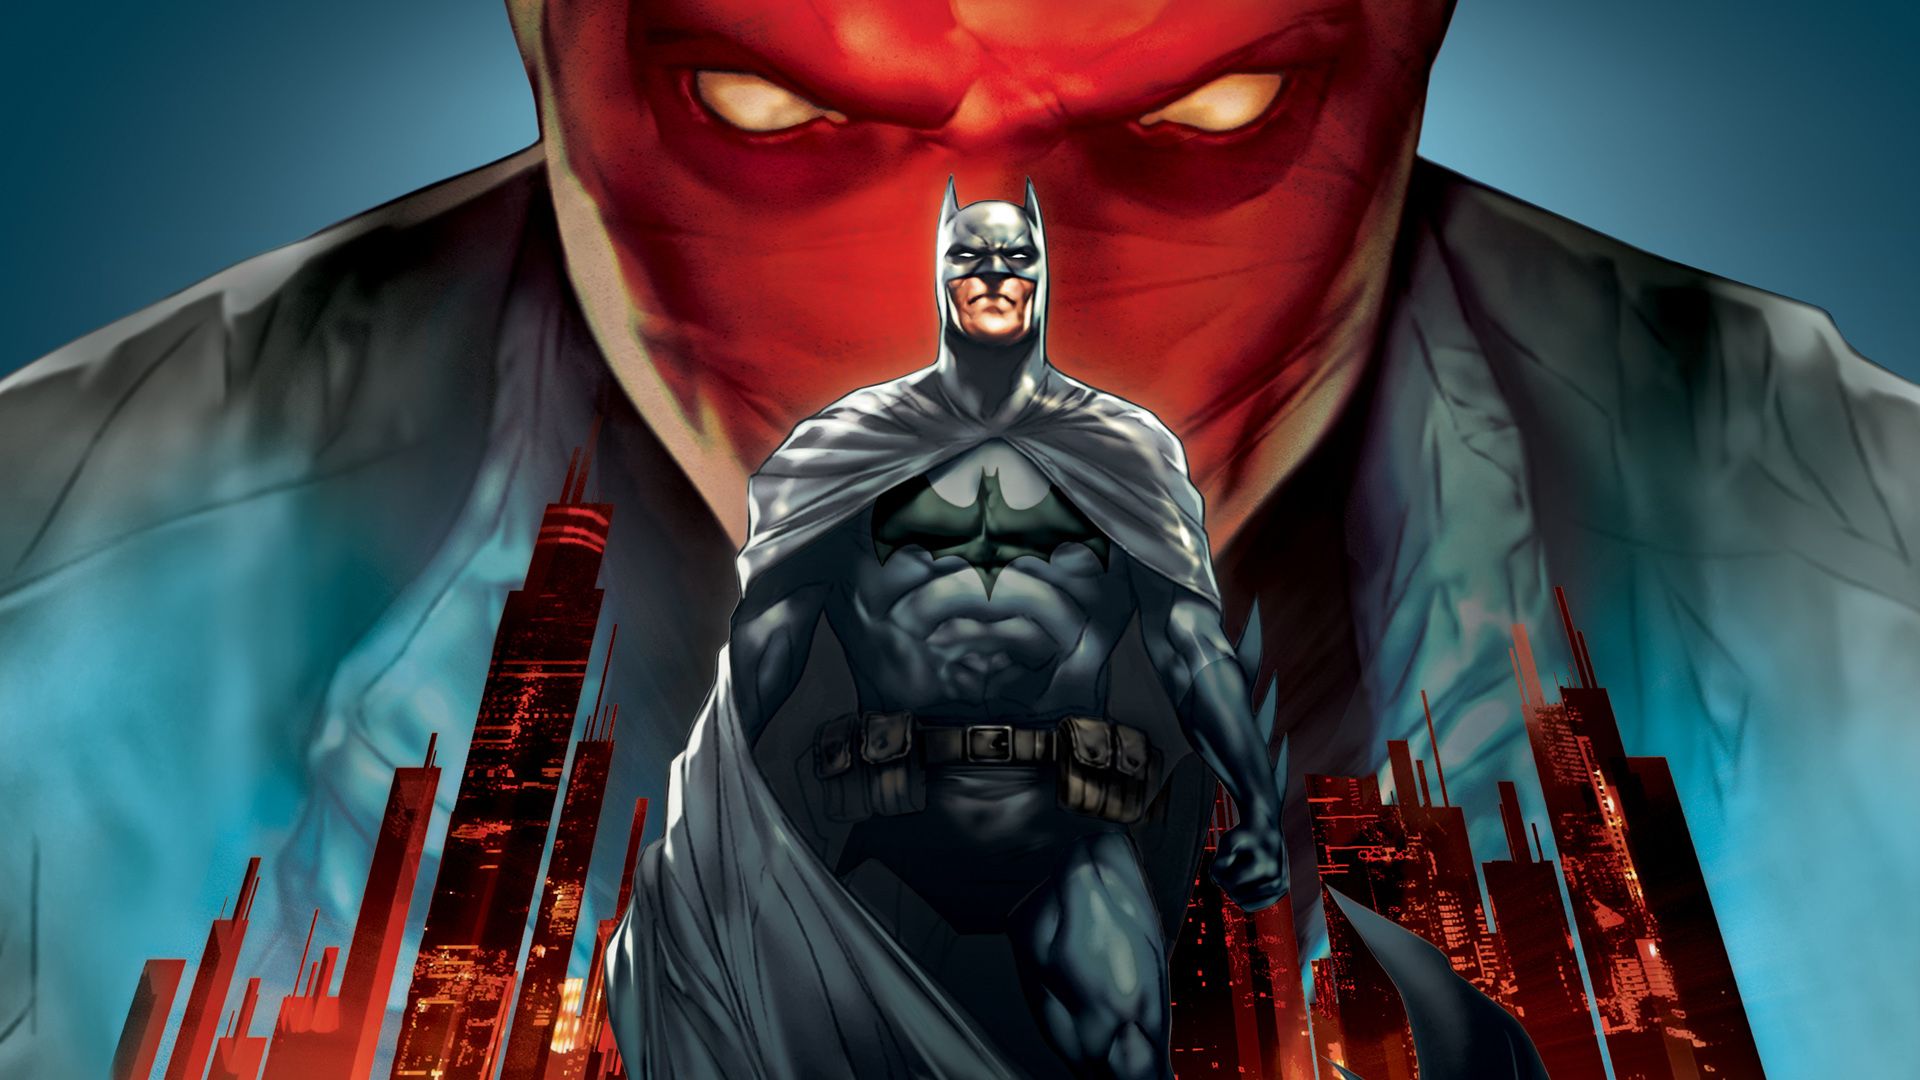 Batman: Under the Red Hood background